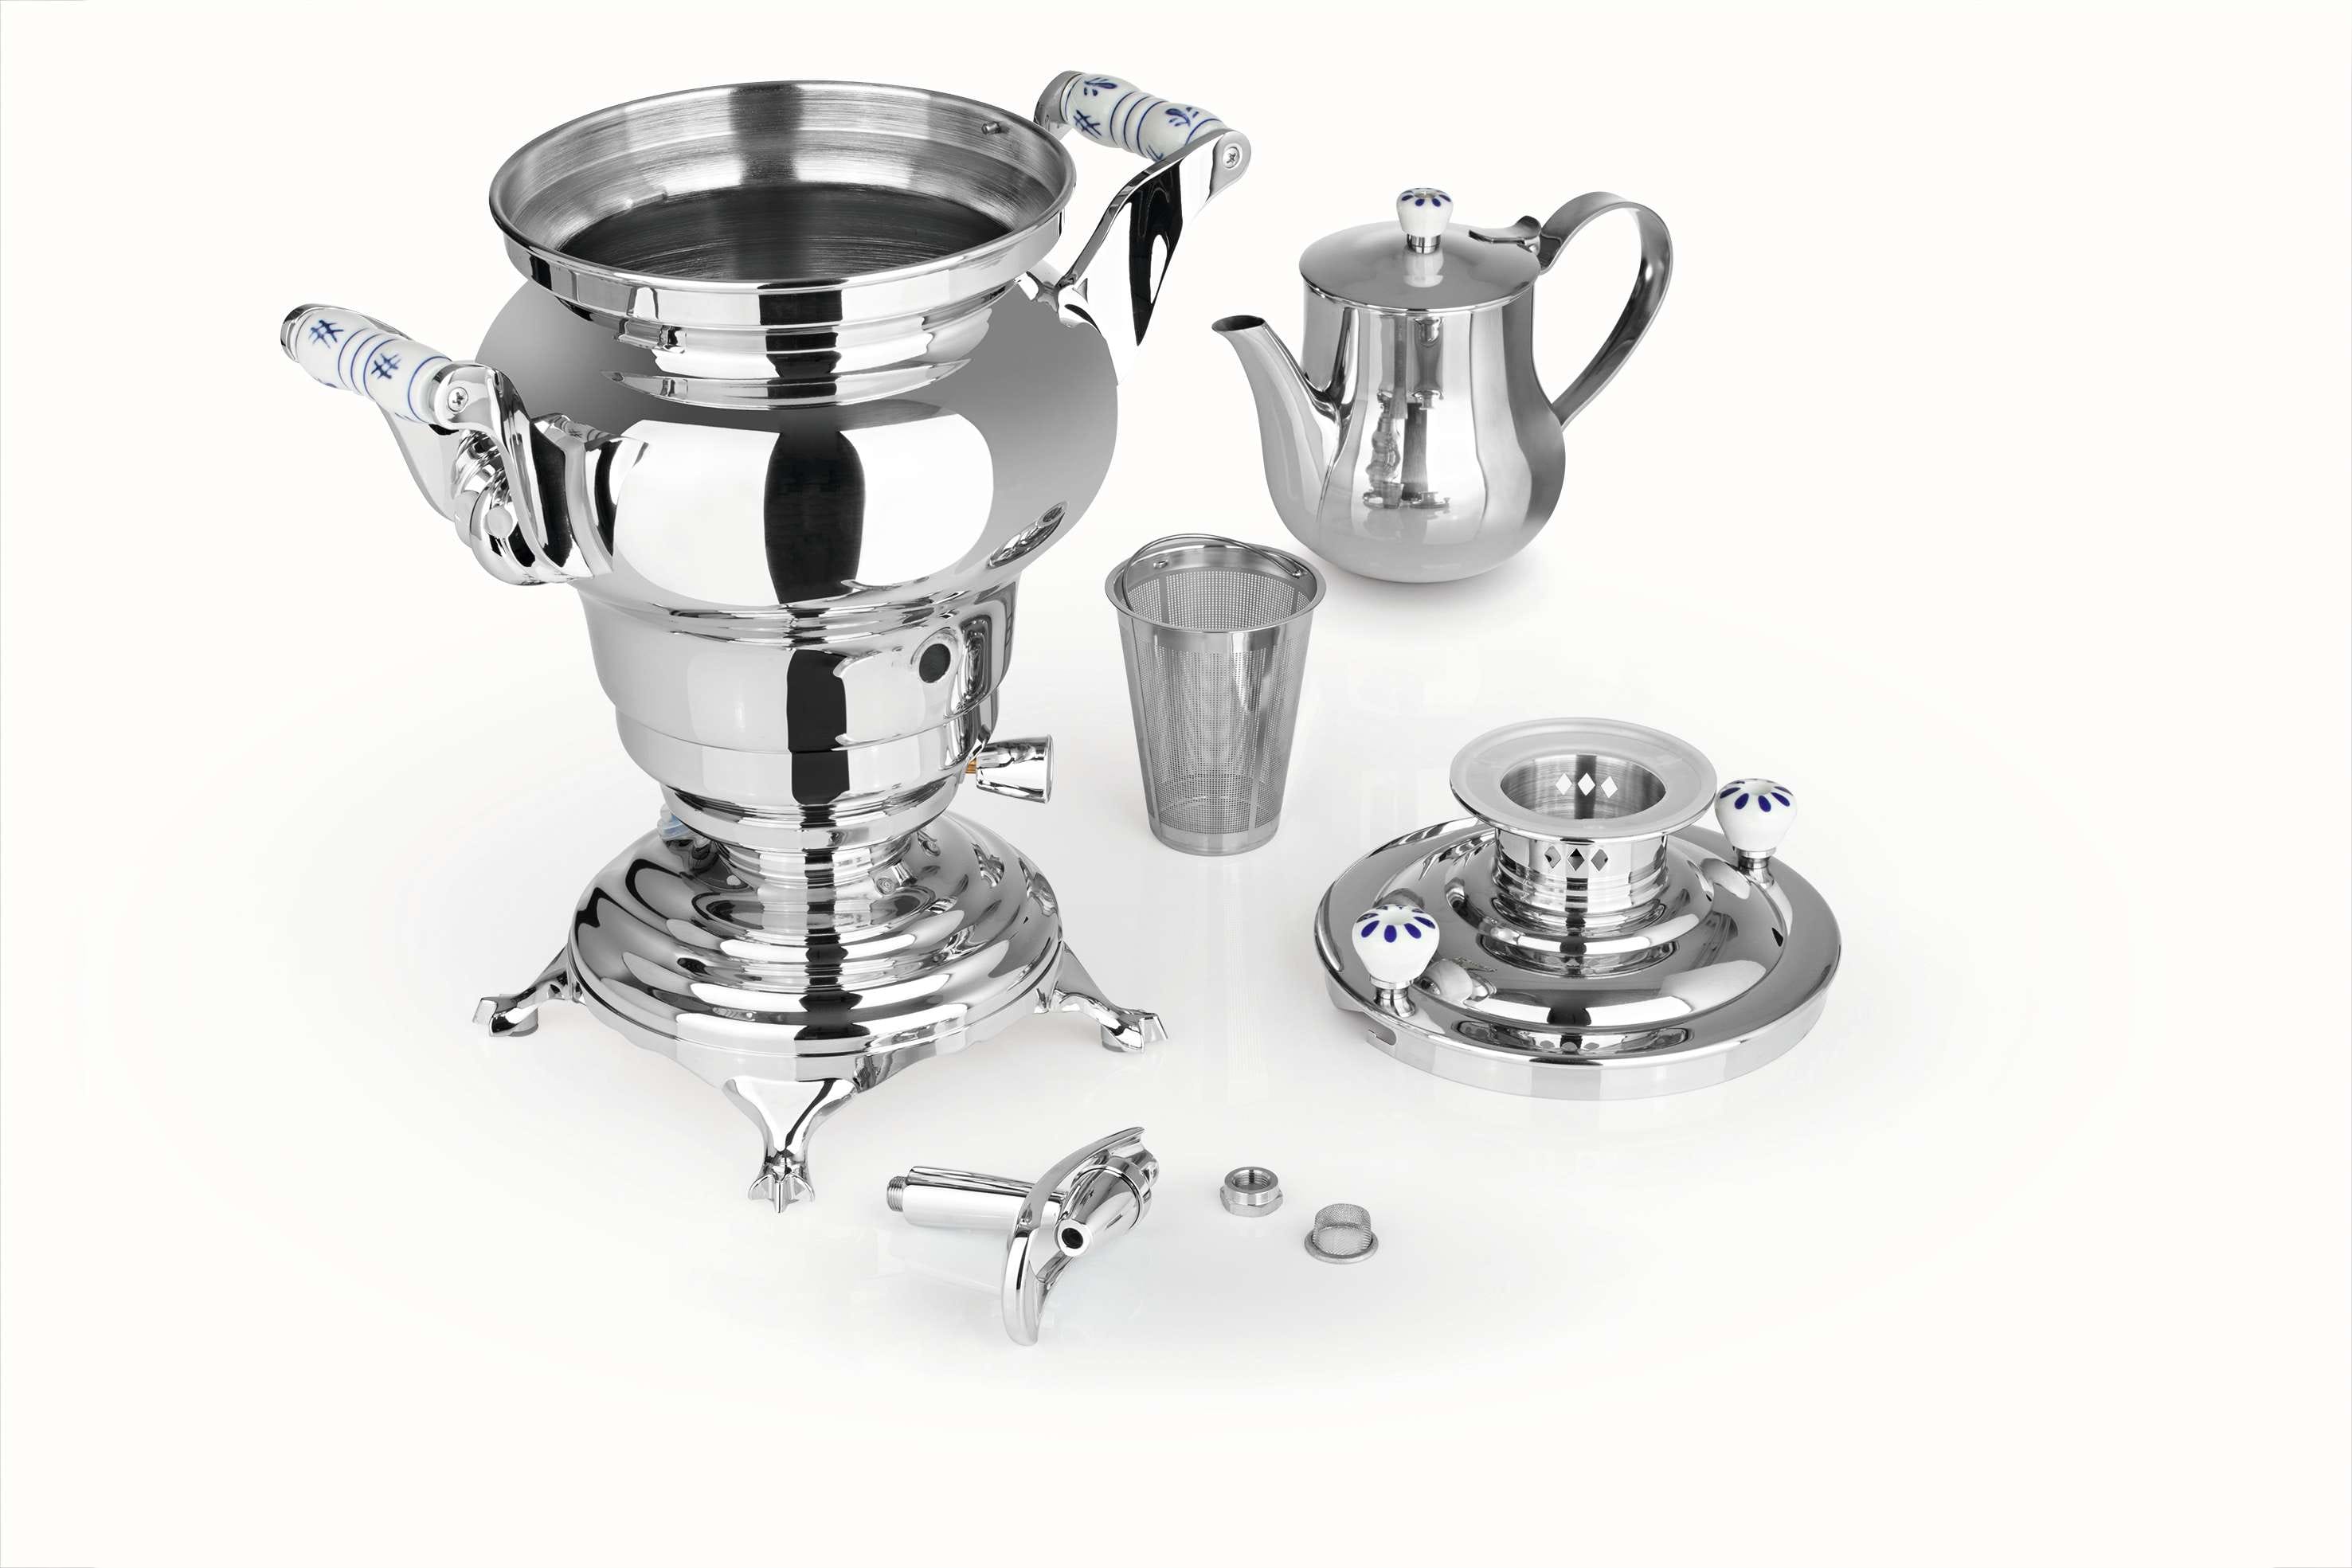 Samovar tea kettle Odessa+ 3l 1800W stainless steel with dispenser -exhibition piece-